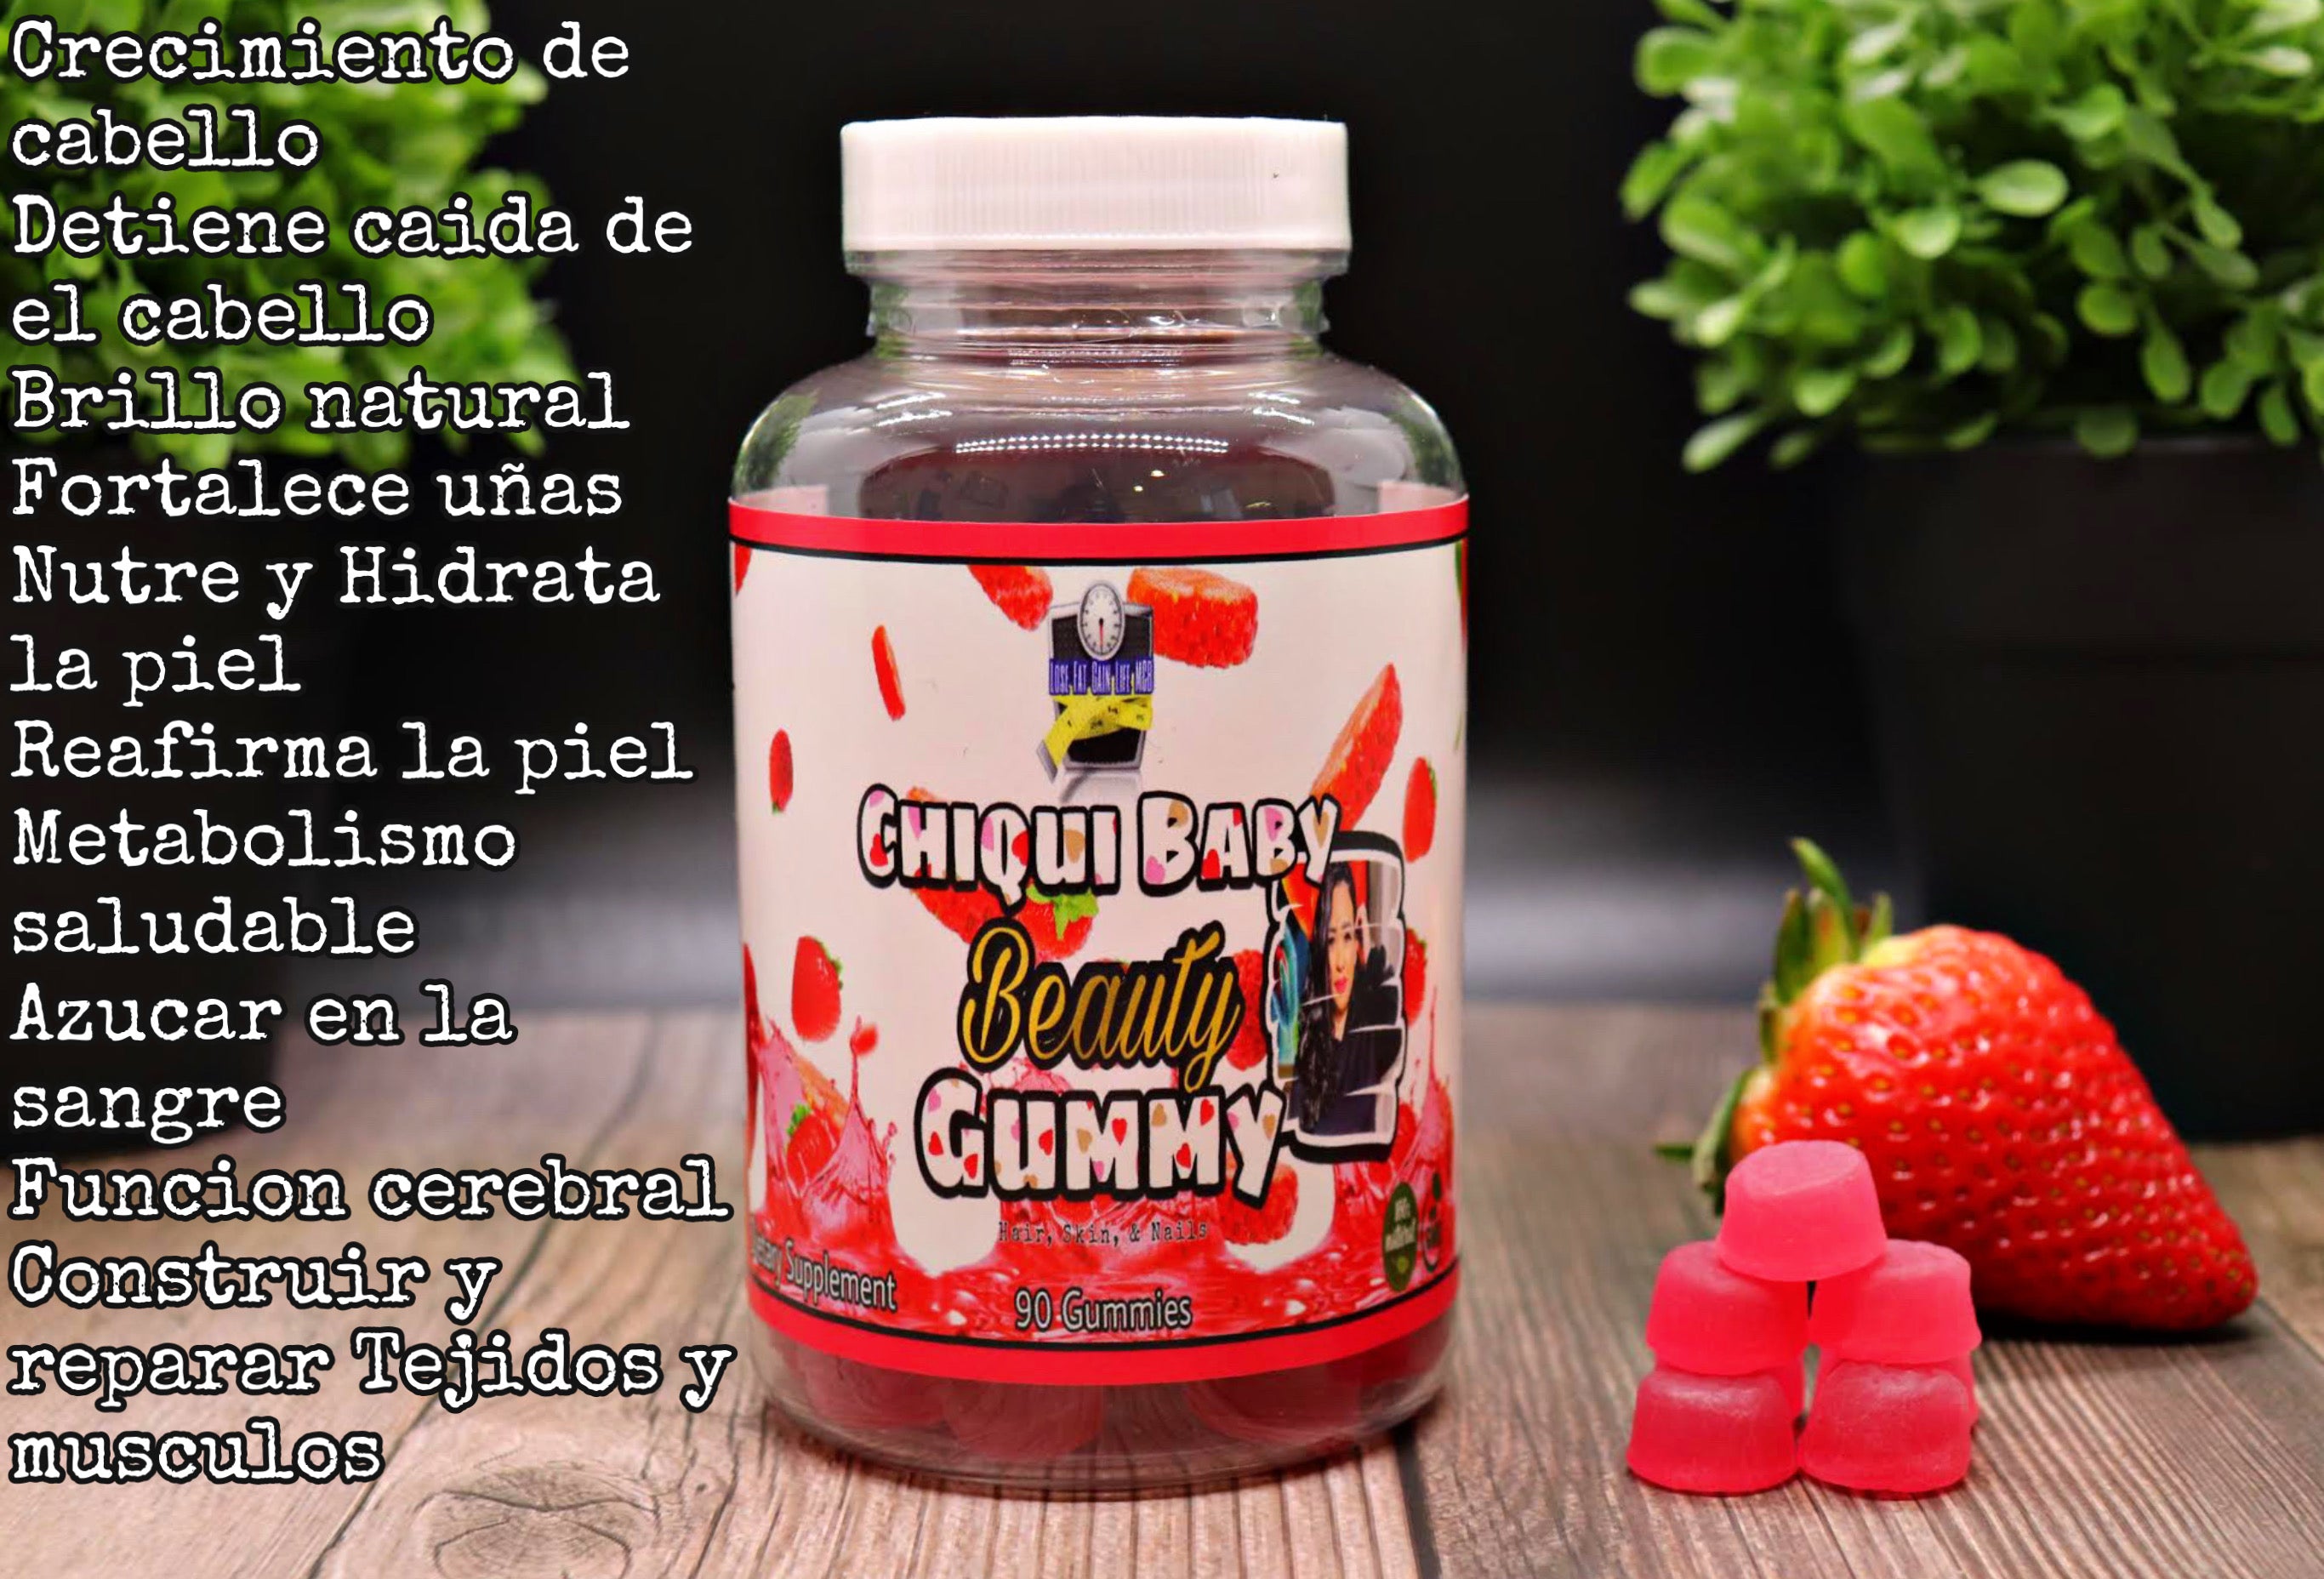 Biotin Shampoo & Chiqui Baby Beauty Gummy